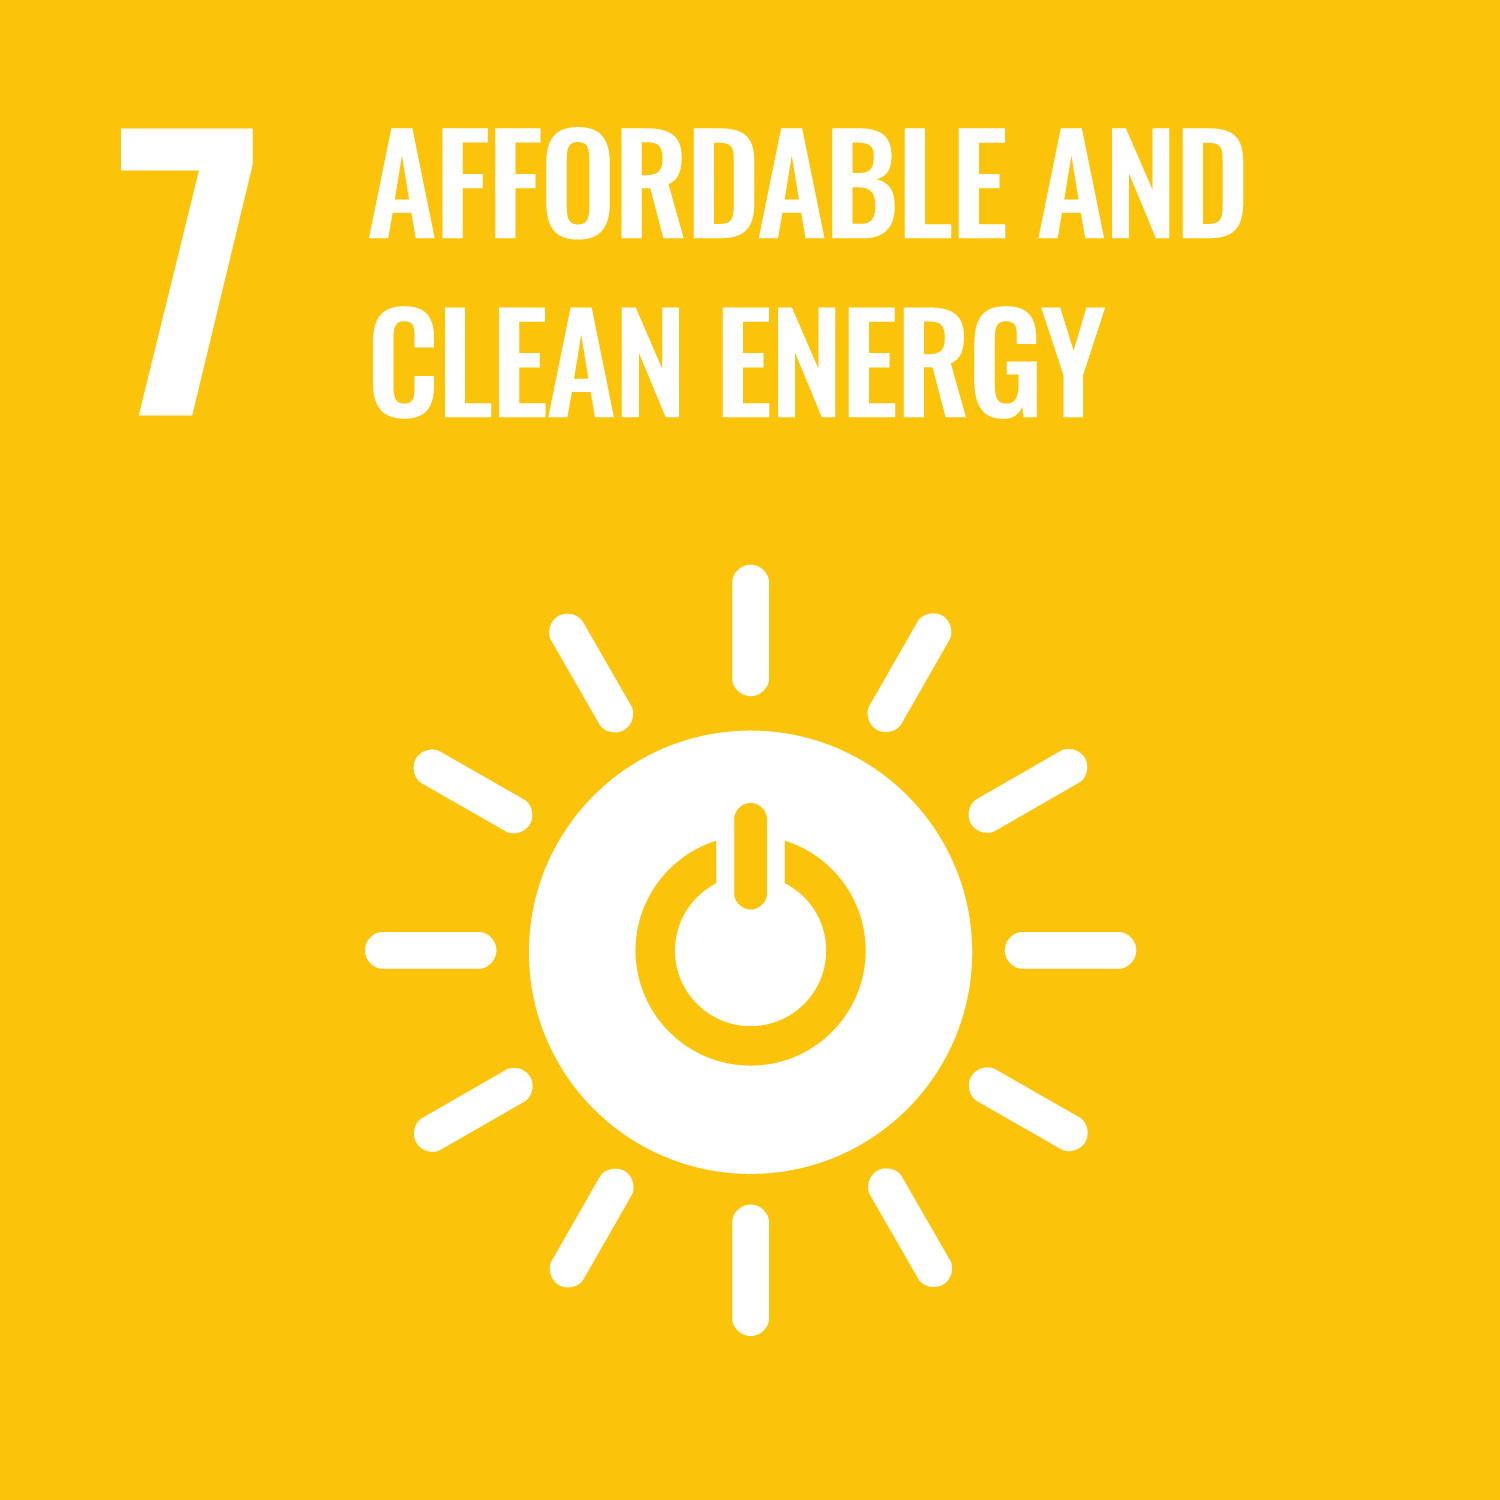 UN Sustainable goal - Clean Energy